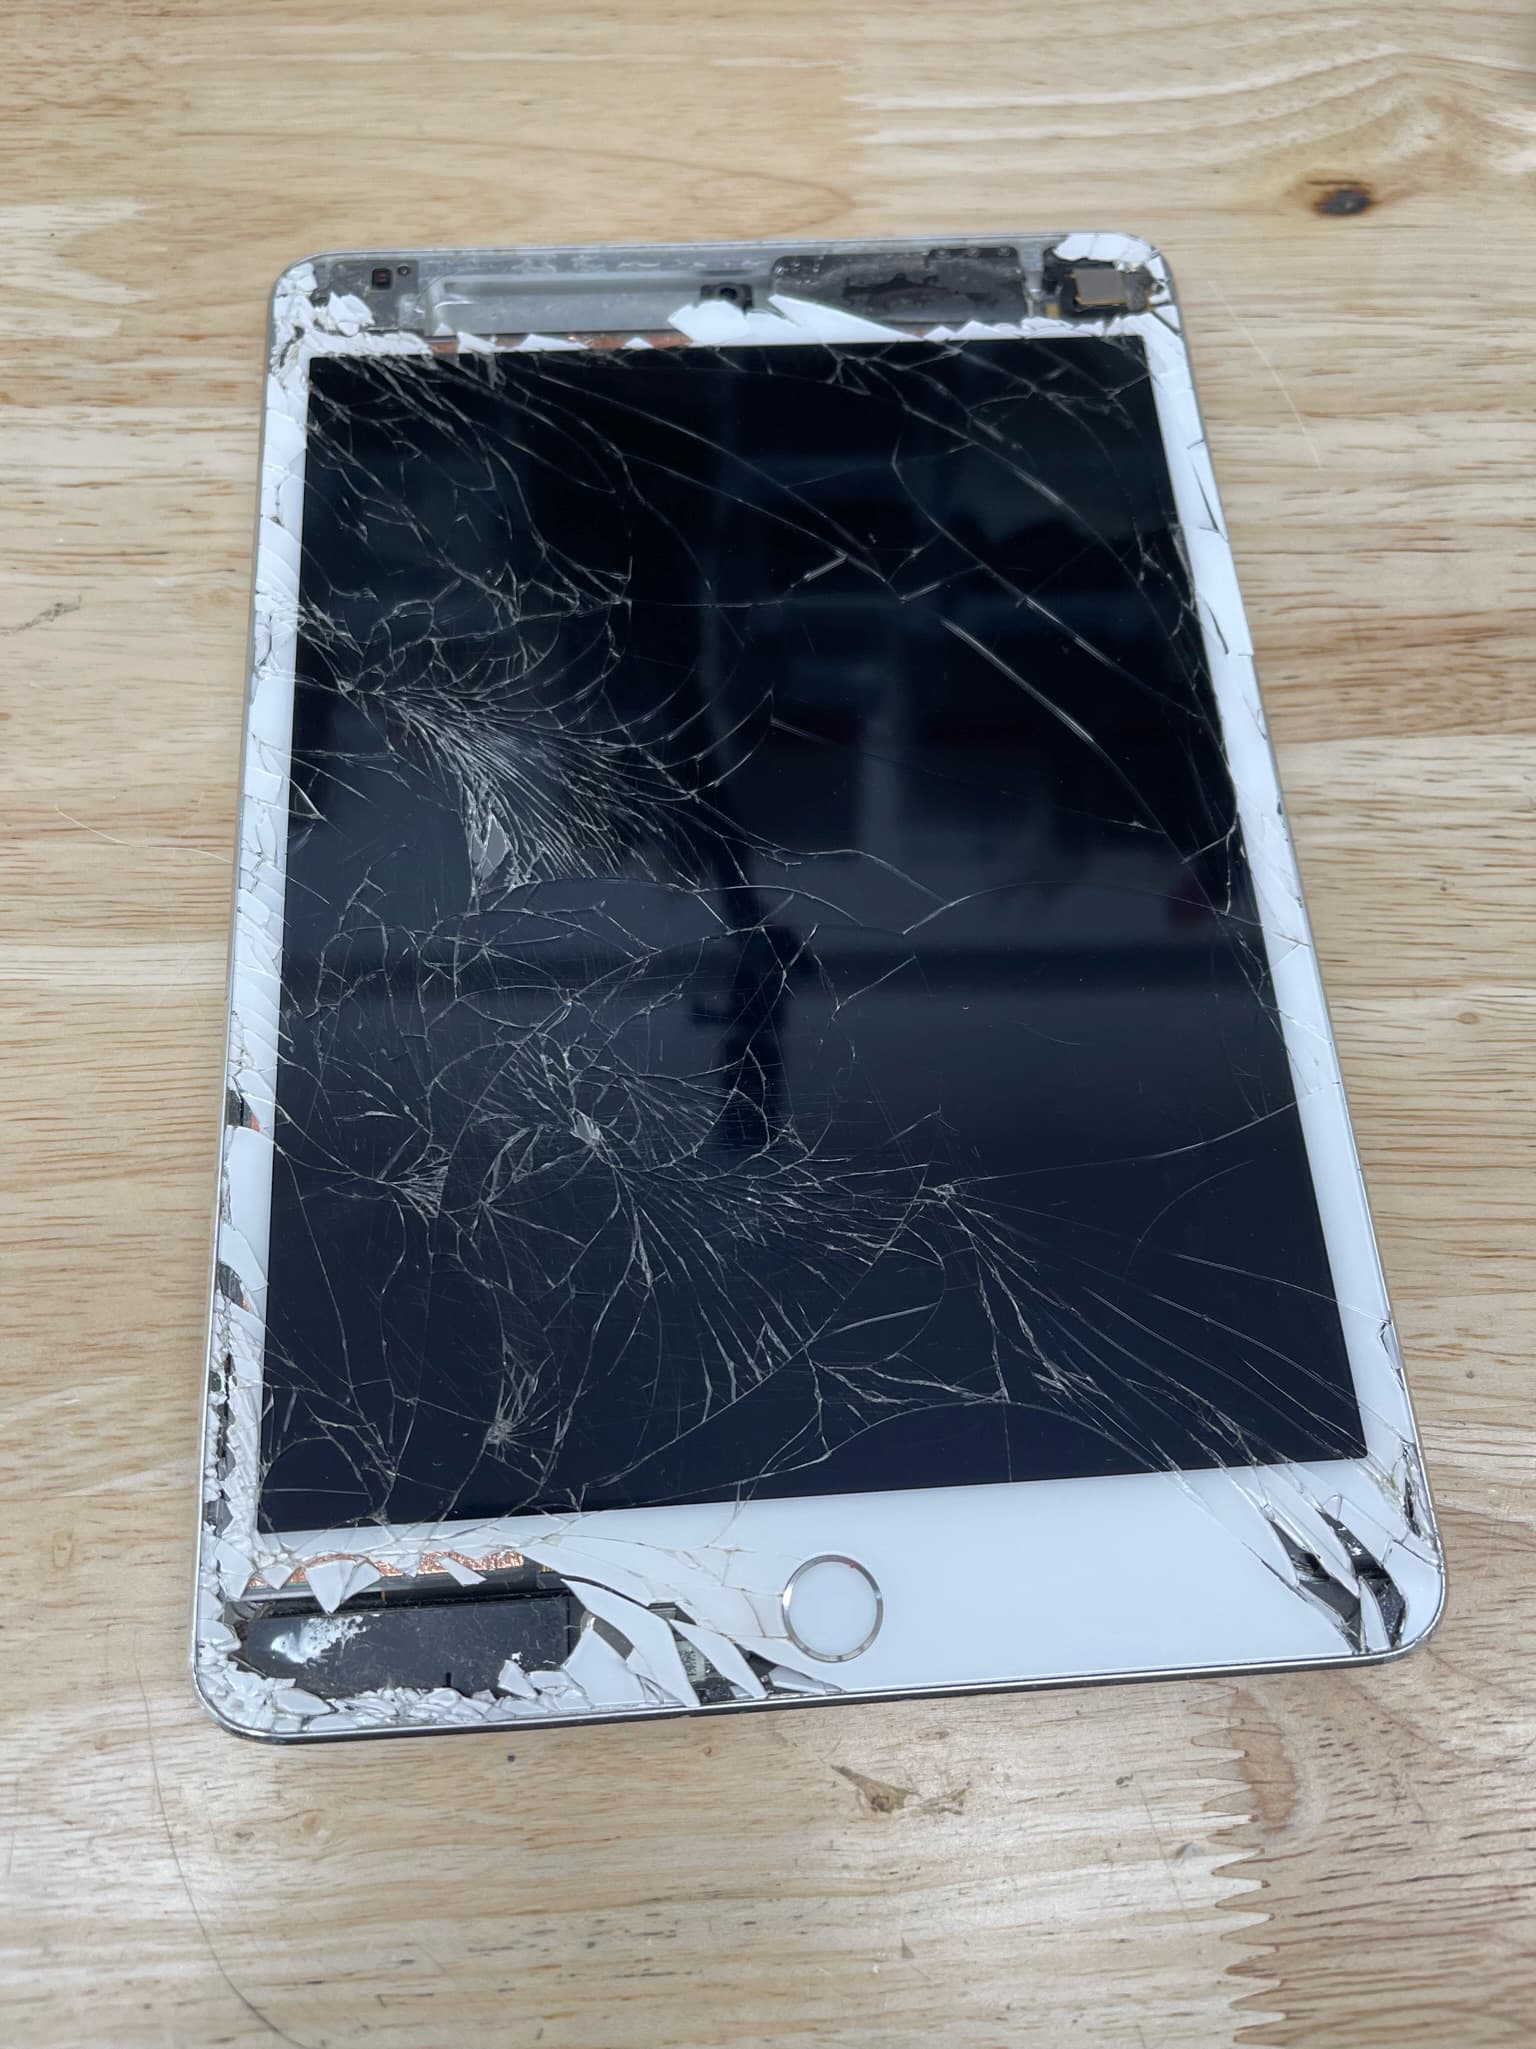 broken ipad mini screen